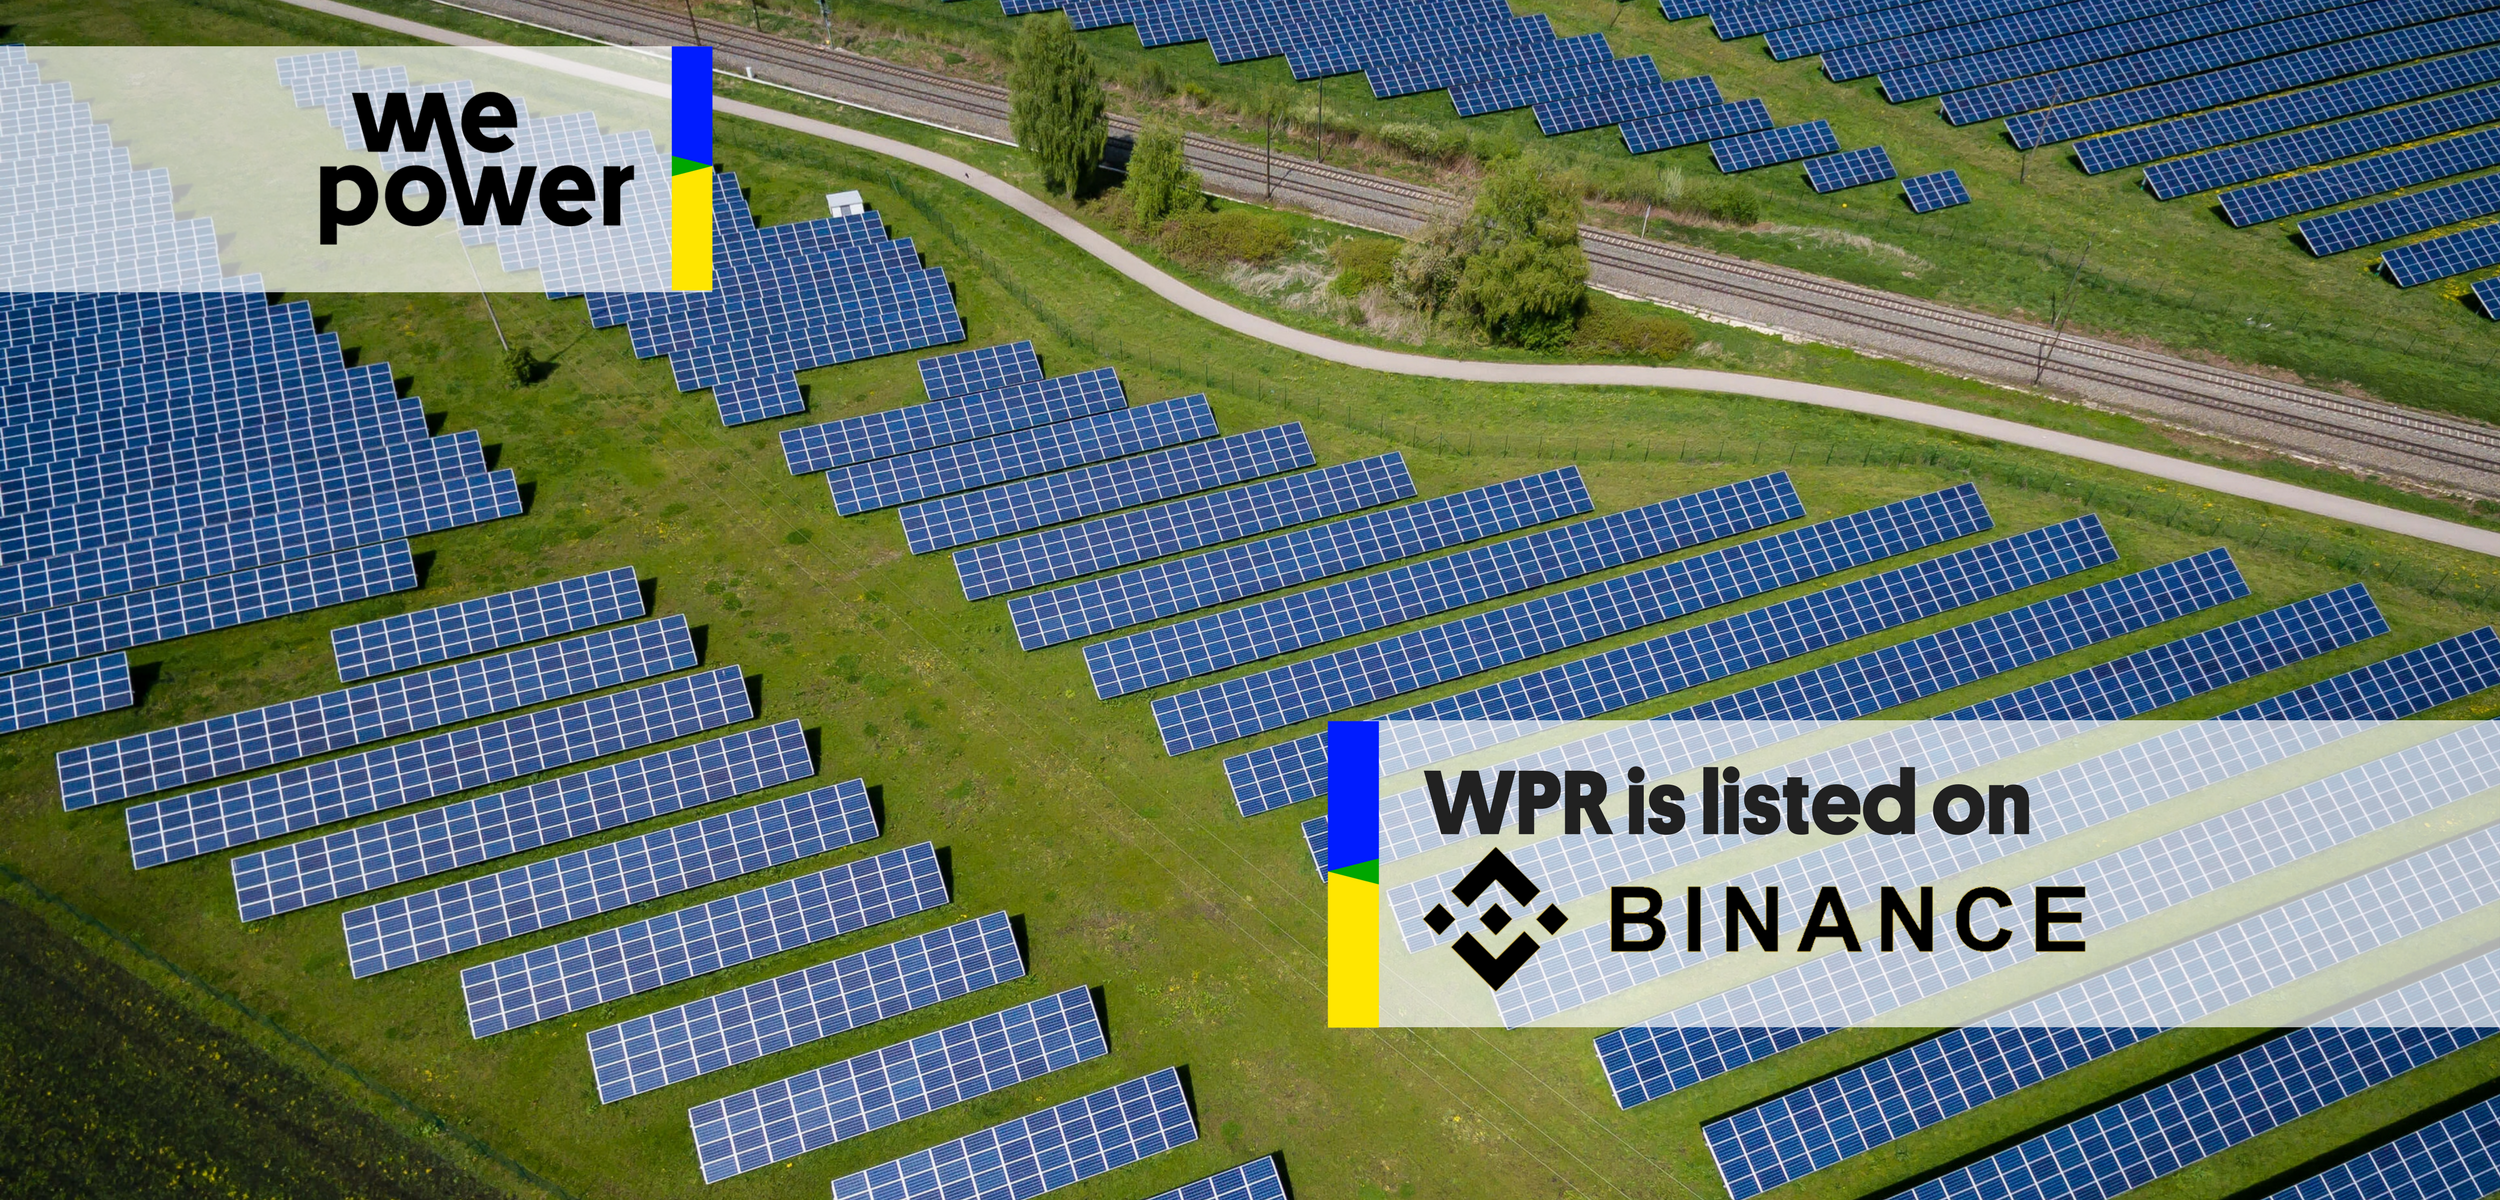 WPR is listed on Binance - WePower - Medium